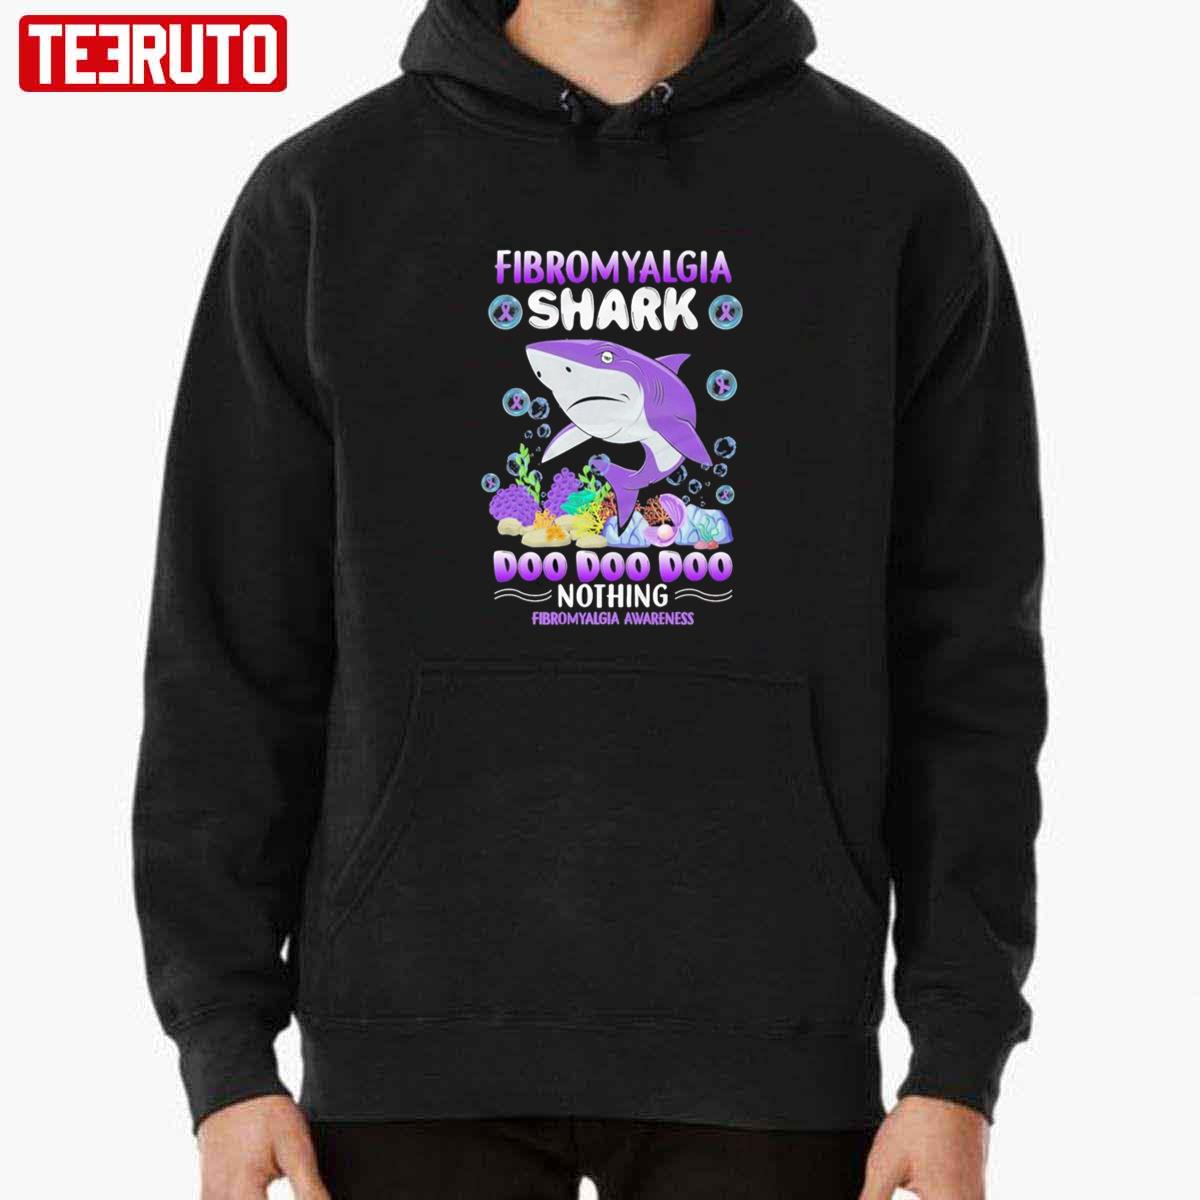 Fibromyalgia Awareness Shark Doo Doo Doo Nothing Unisex T-Shirt